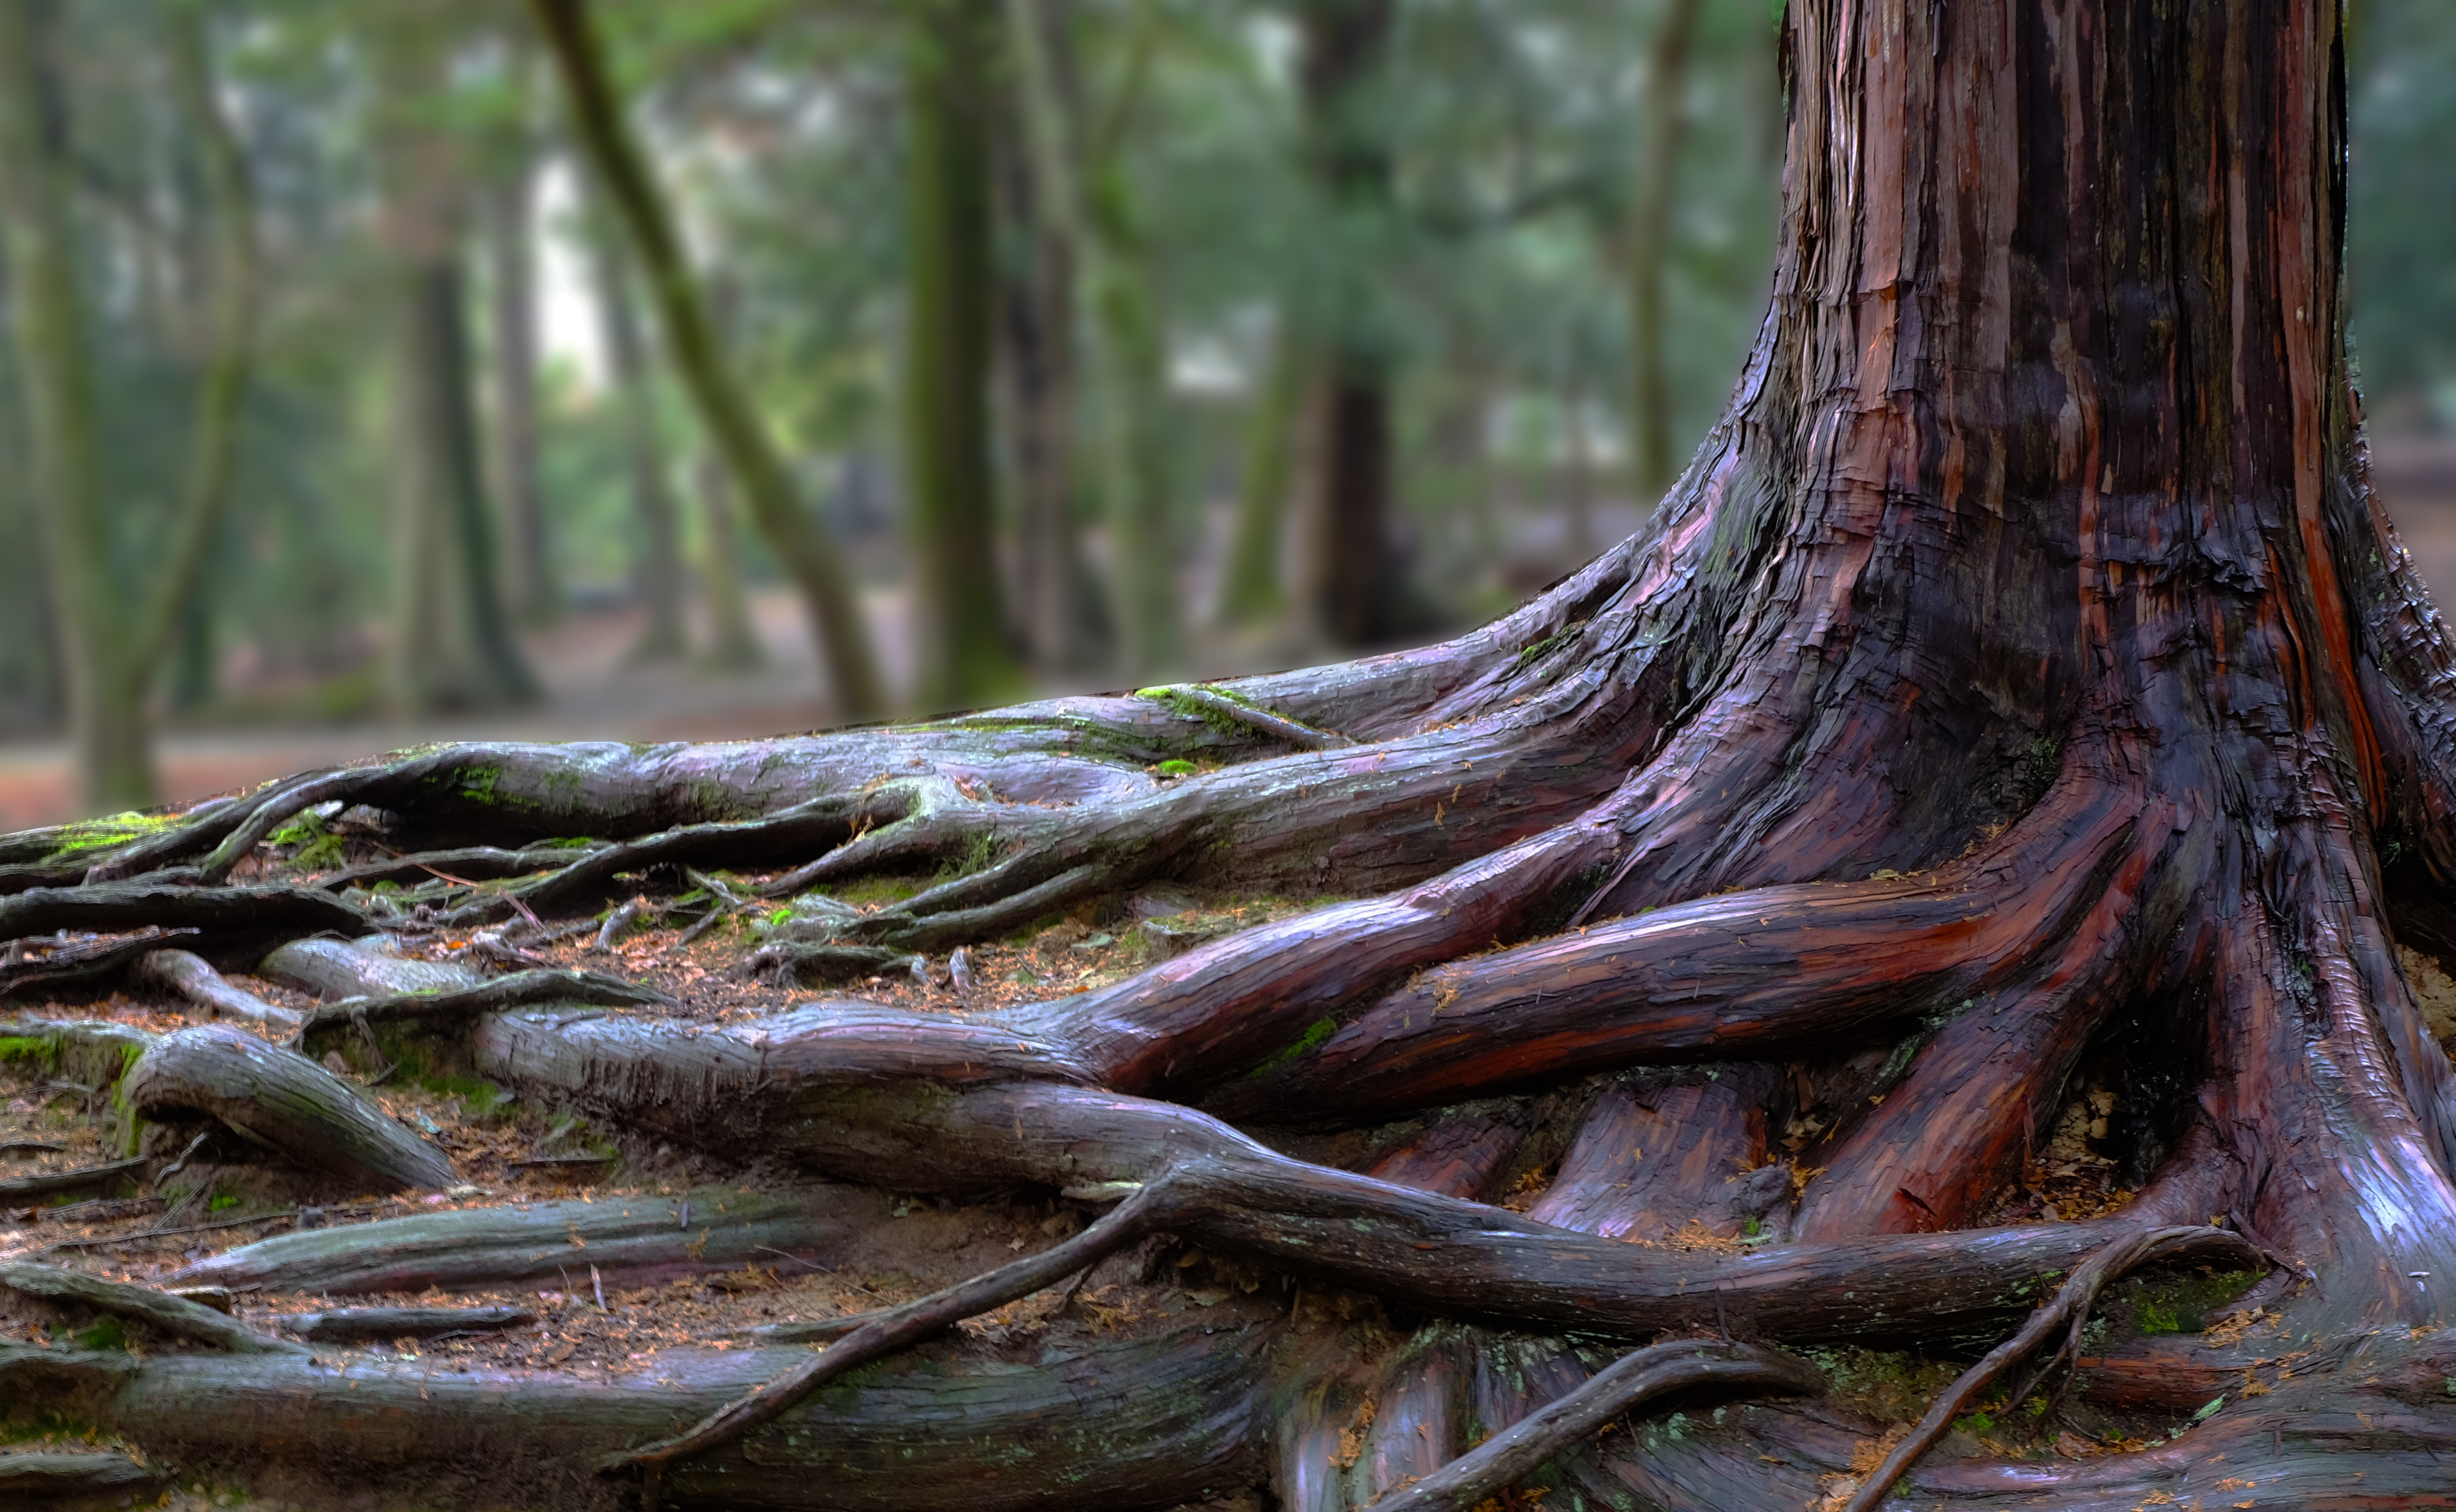 Roots | Source: Shutterstock